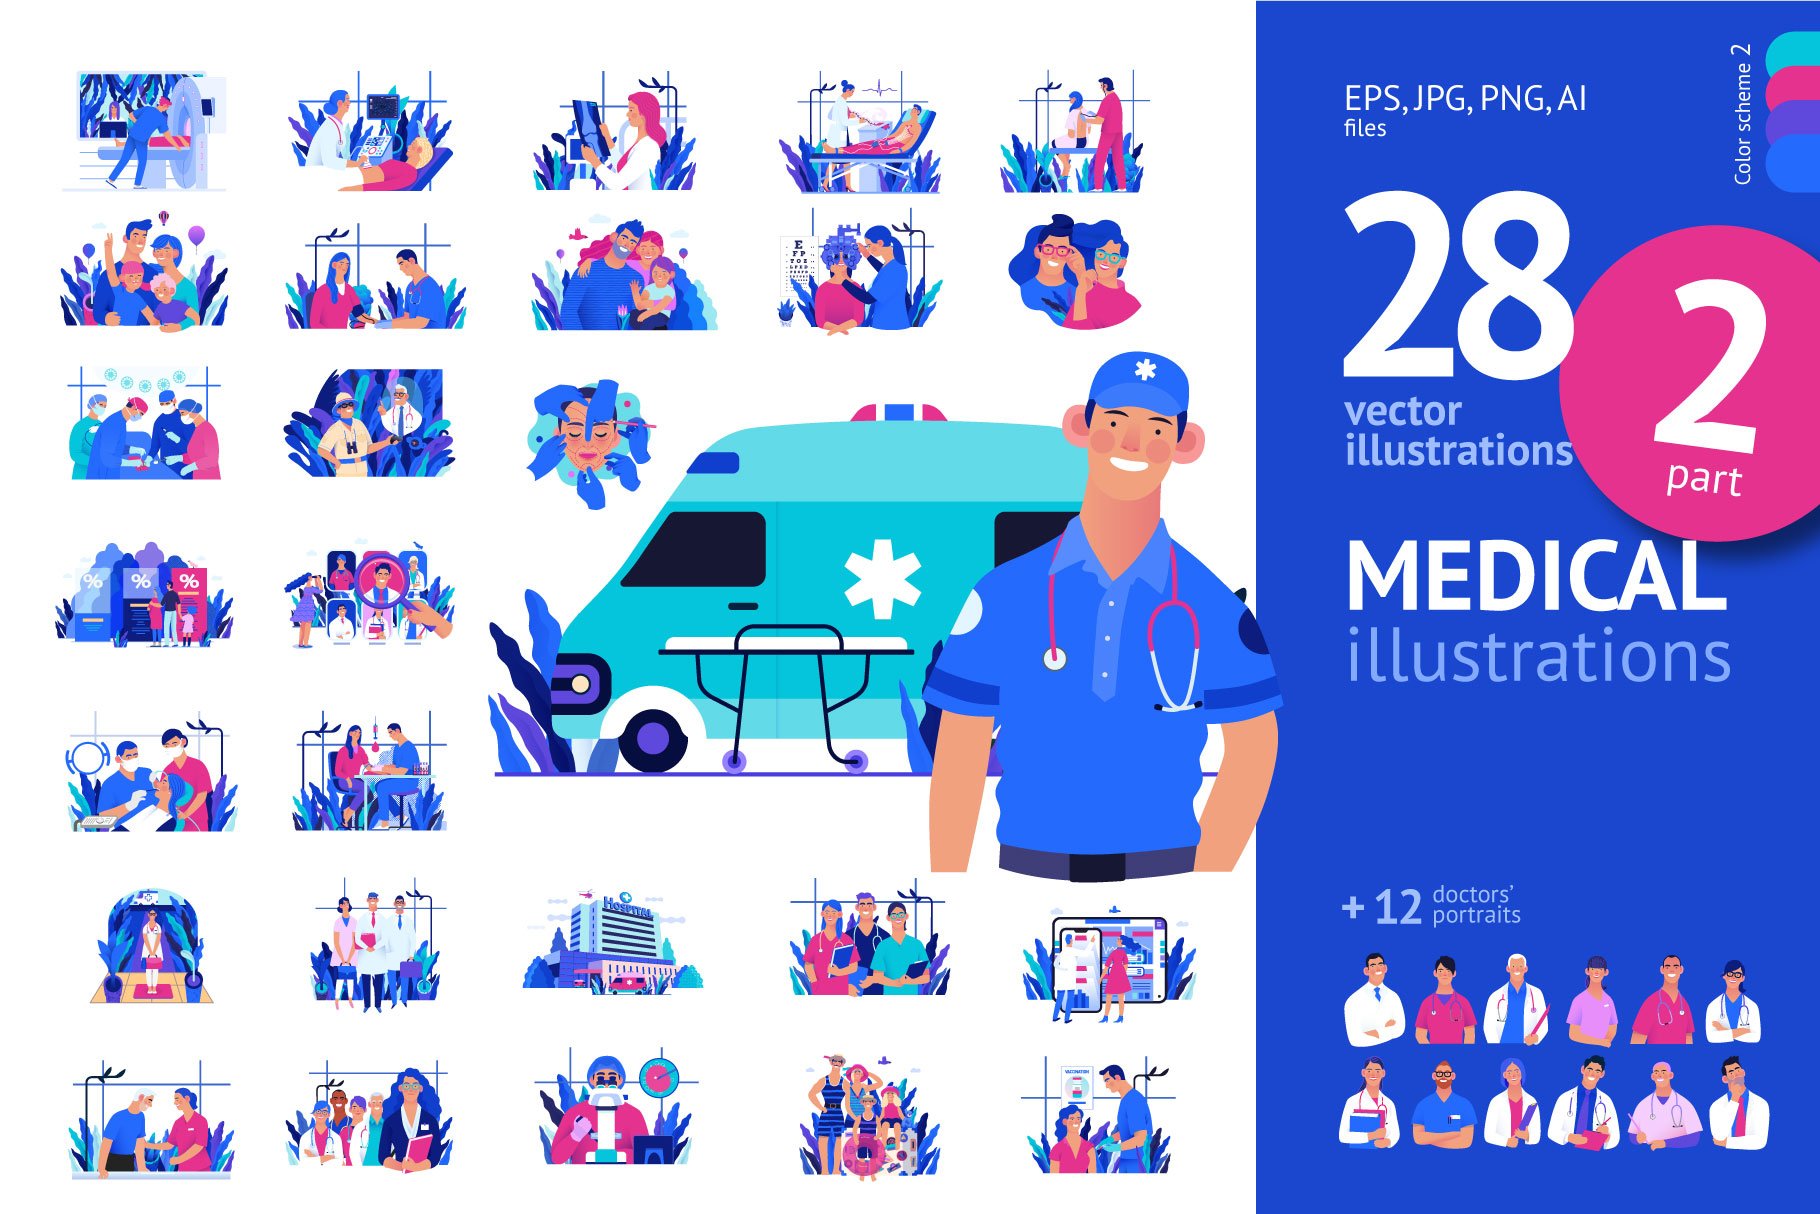 Part 2 Medical illustration, Color 2 cover image.